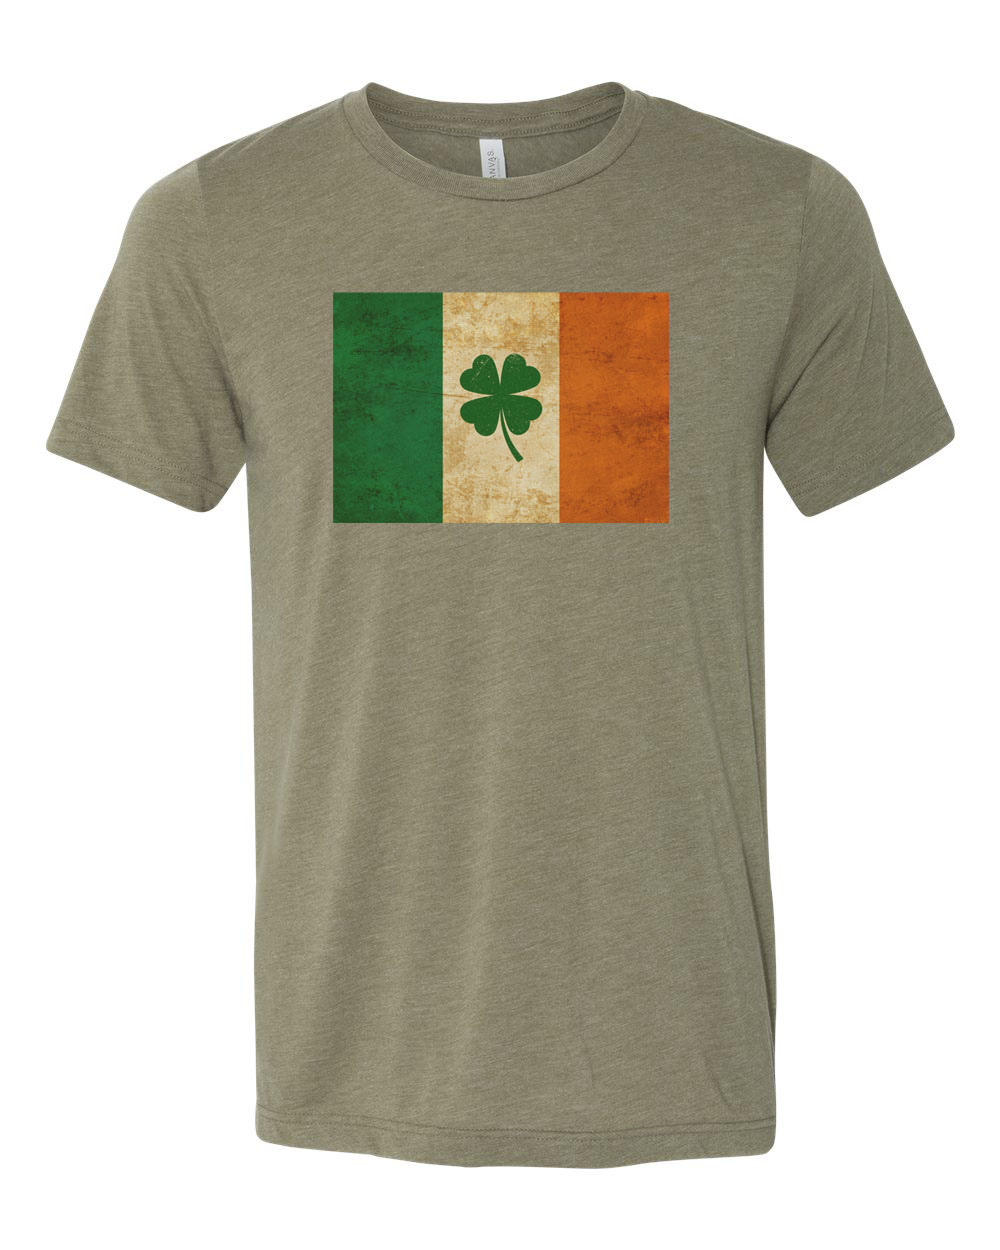 St. Patricks Day Shirt, Shamrock Shirt, Irish Flag, Ireland Shirt, Unisex Fit, Irish Shirt, Shamrock, Irish Flag Shirt, St Patty's Shirt, Heather Olive, XL - image 1 of 1